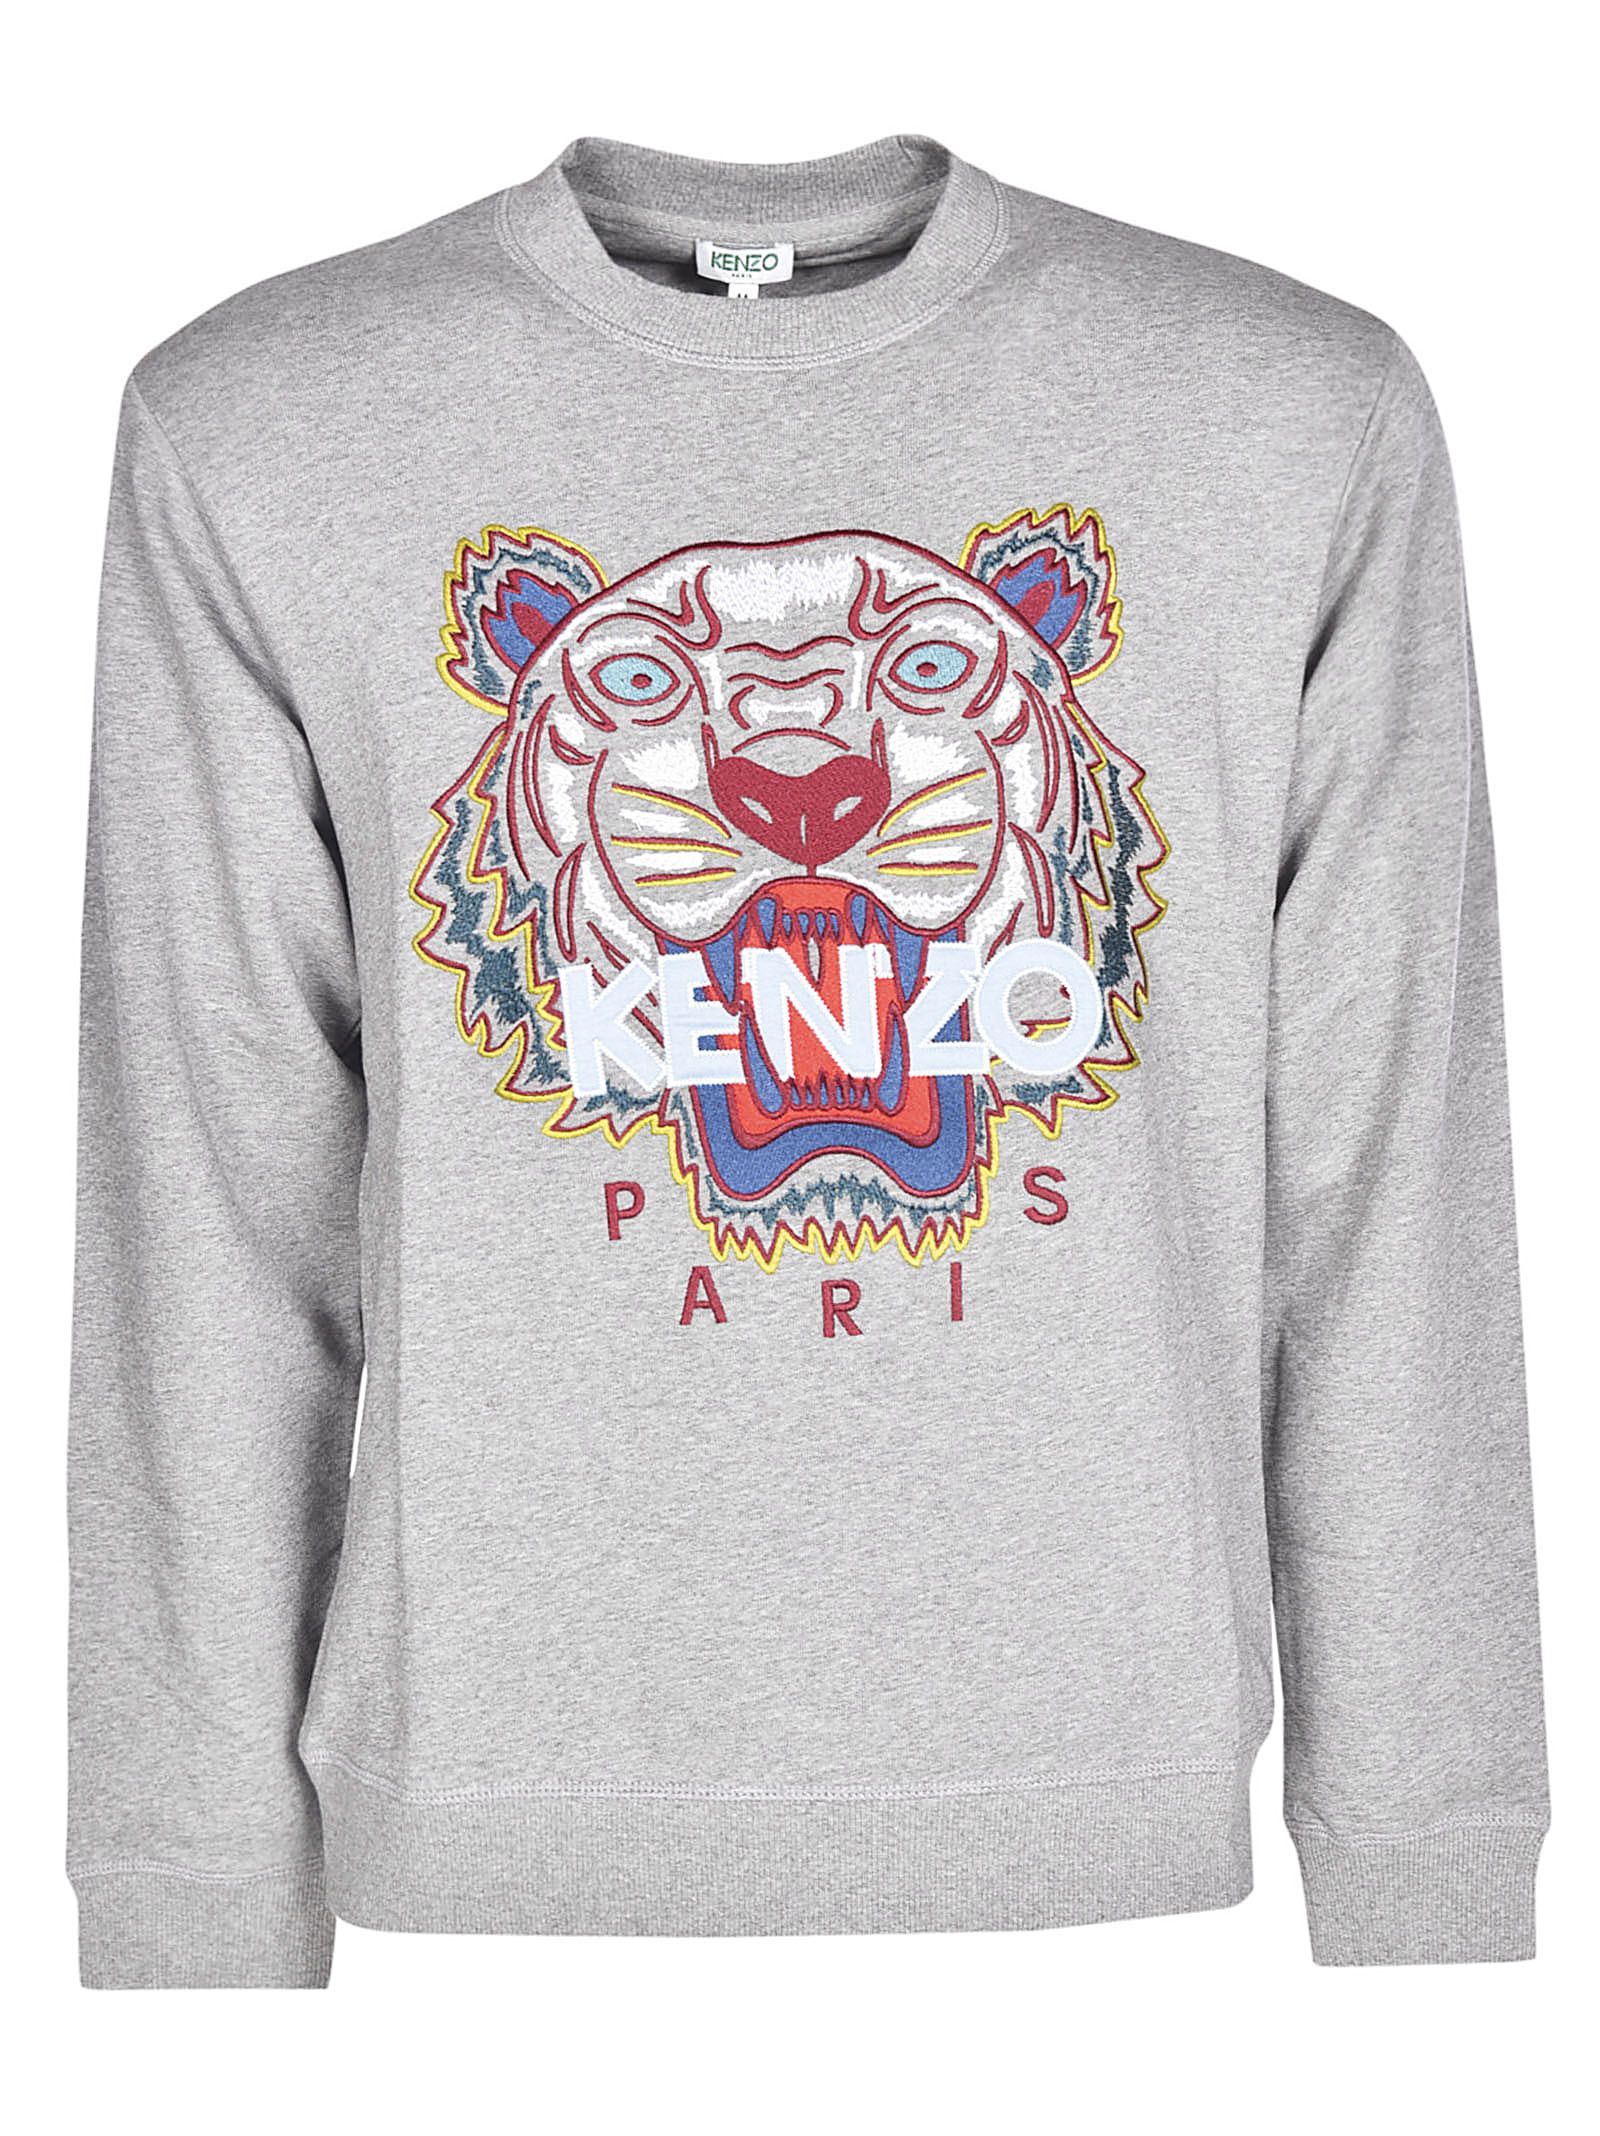 italist | Best price in the market for Kenzo Kenzo Tiger Sweatshirt ...